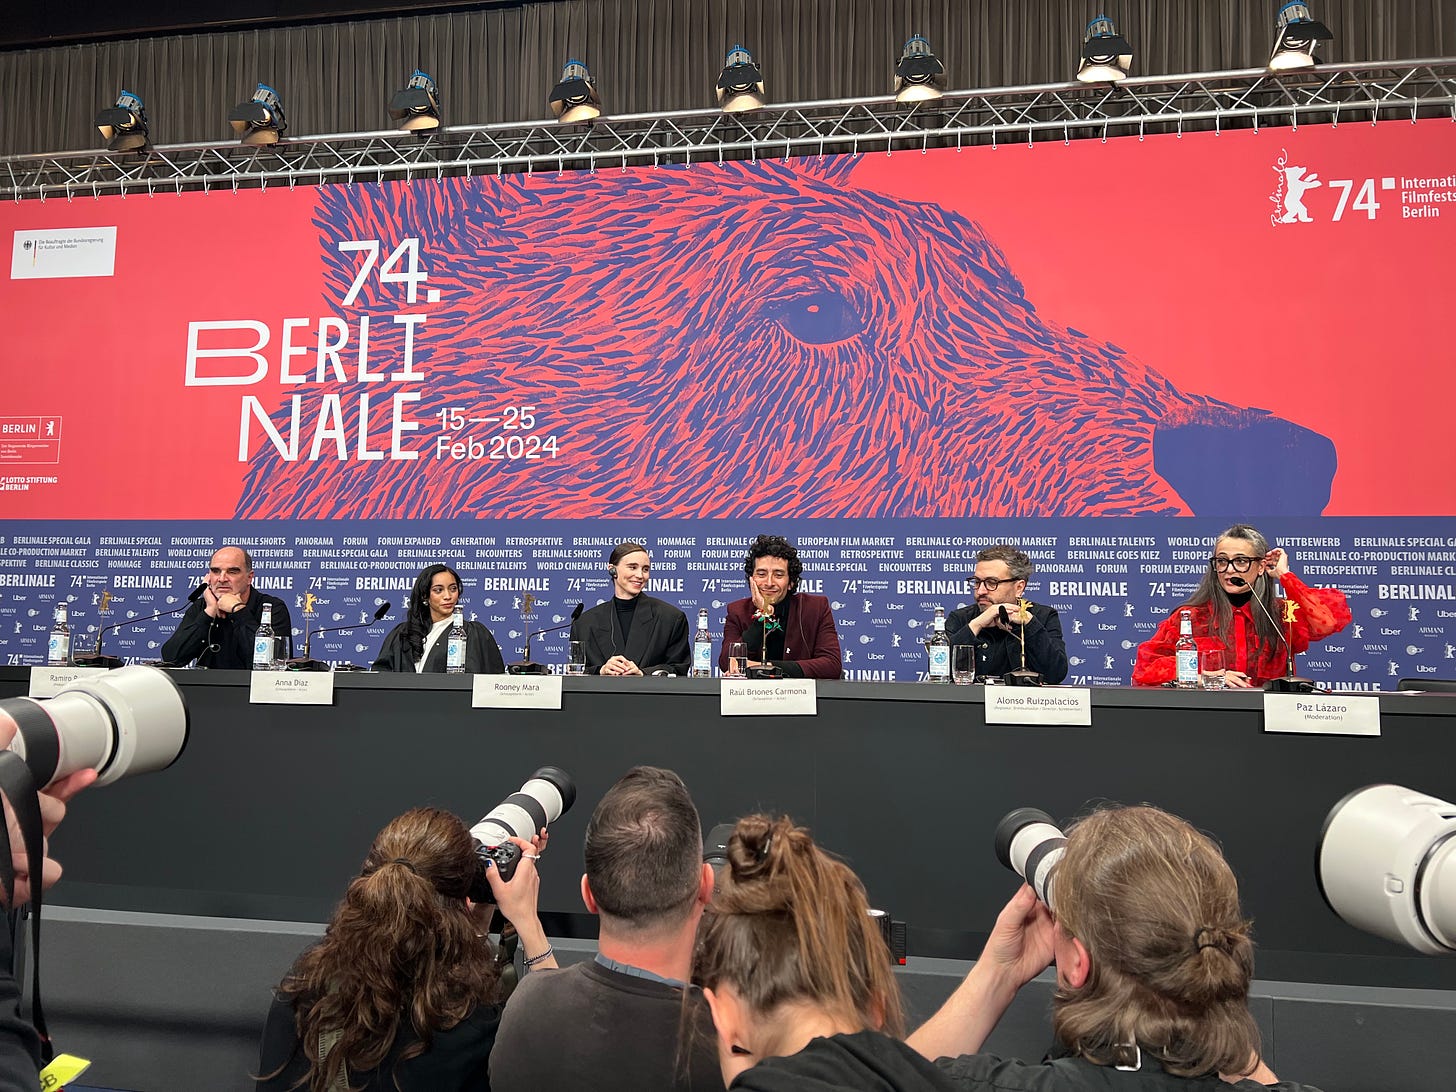 La Cocina press conference, starring Rooney Mara